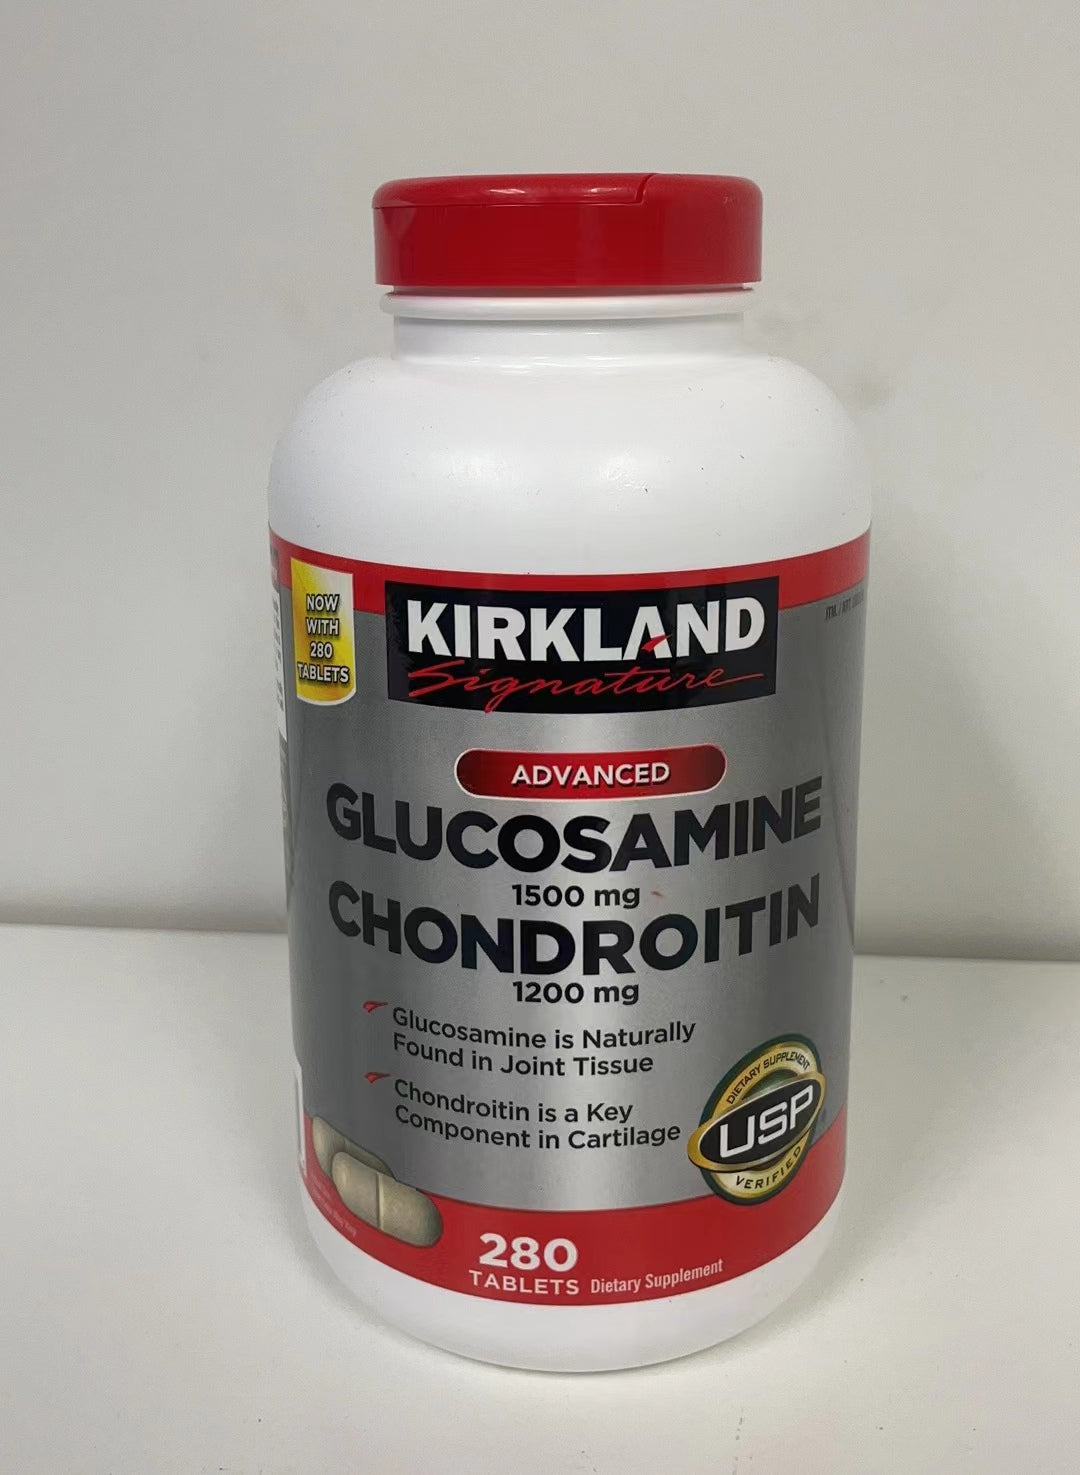 Kirkland Signature Advanced Glucosamine 1500mg & Chondroitin 1200mg, 280 Tablets